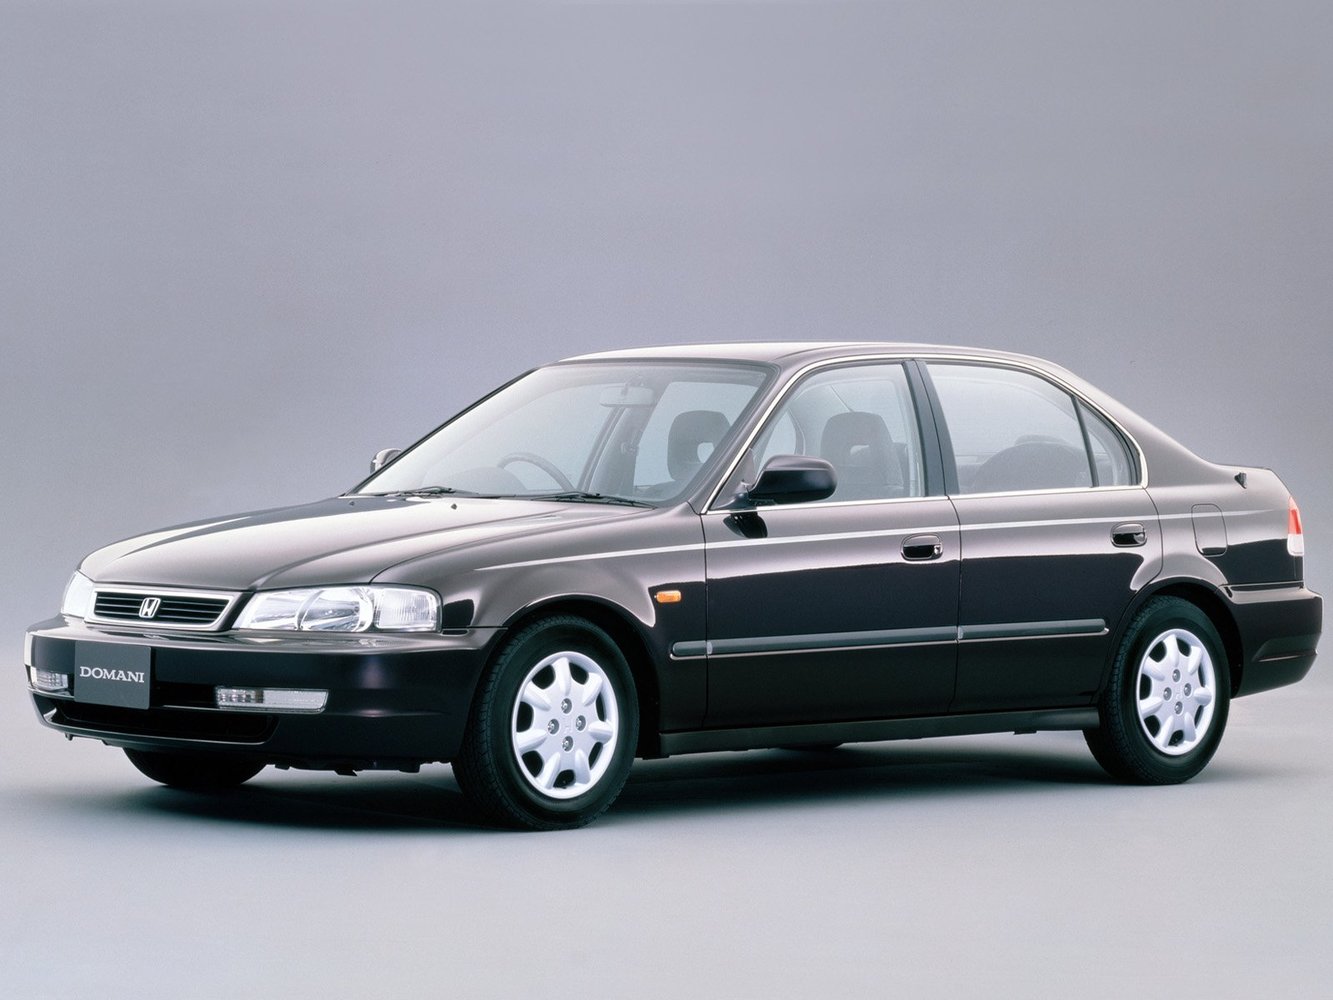 Honda Domani 1997 - 2000